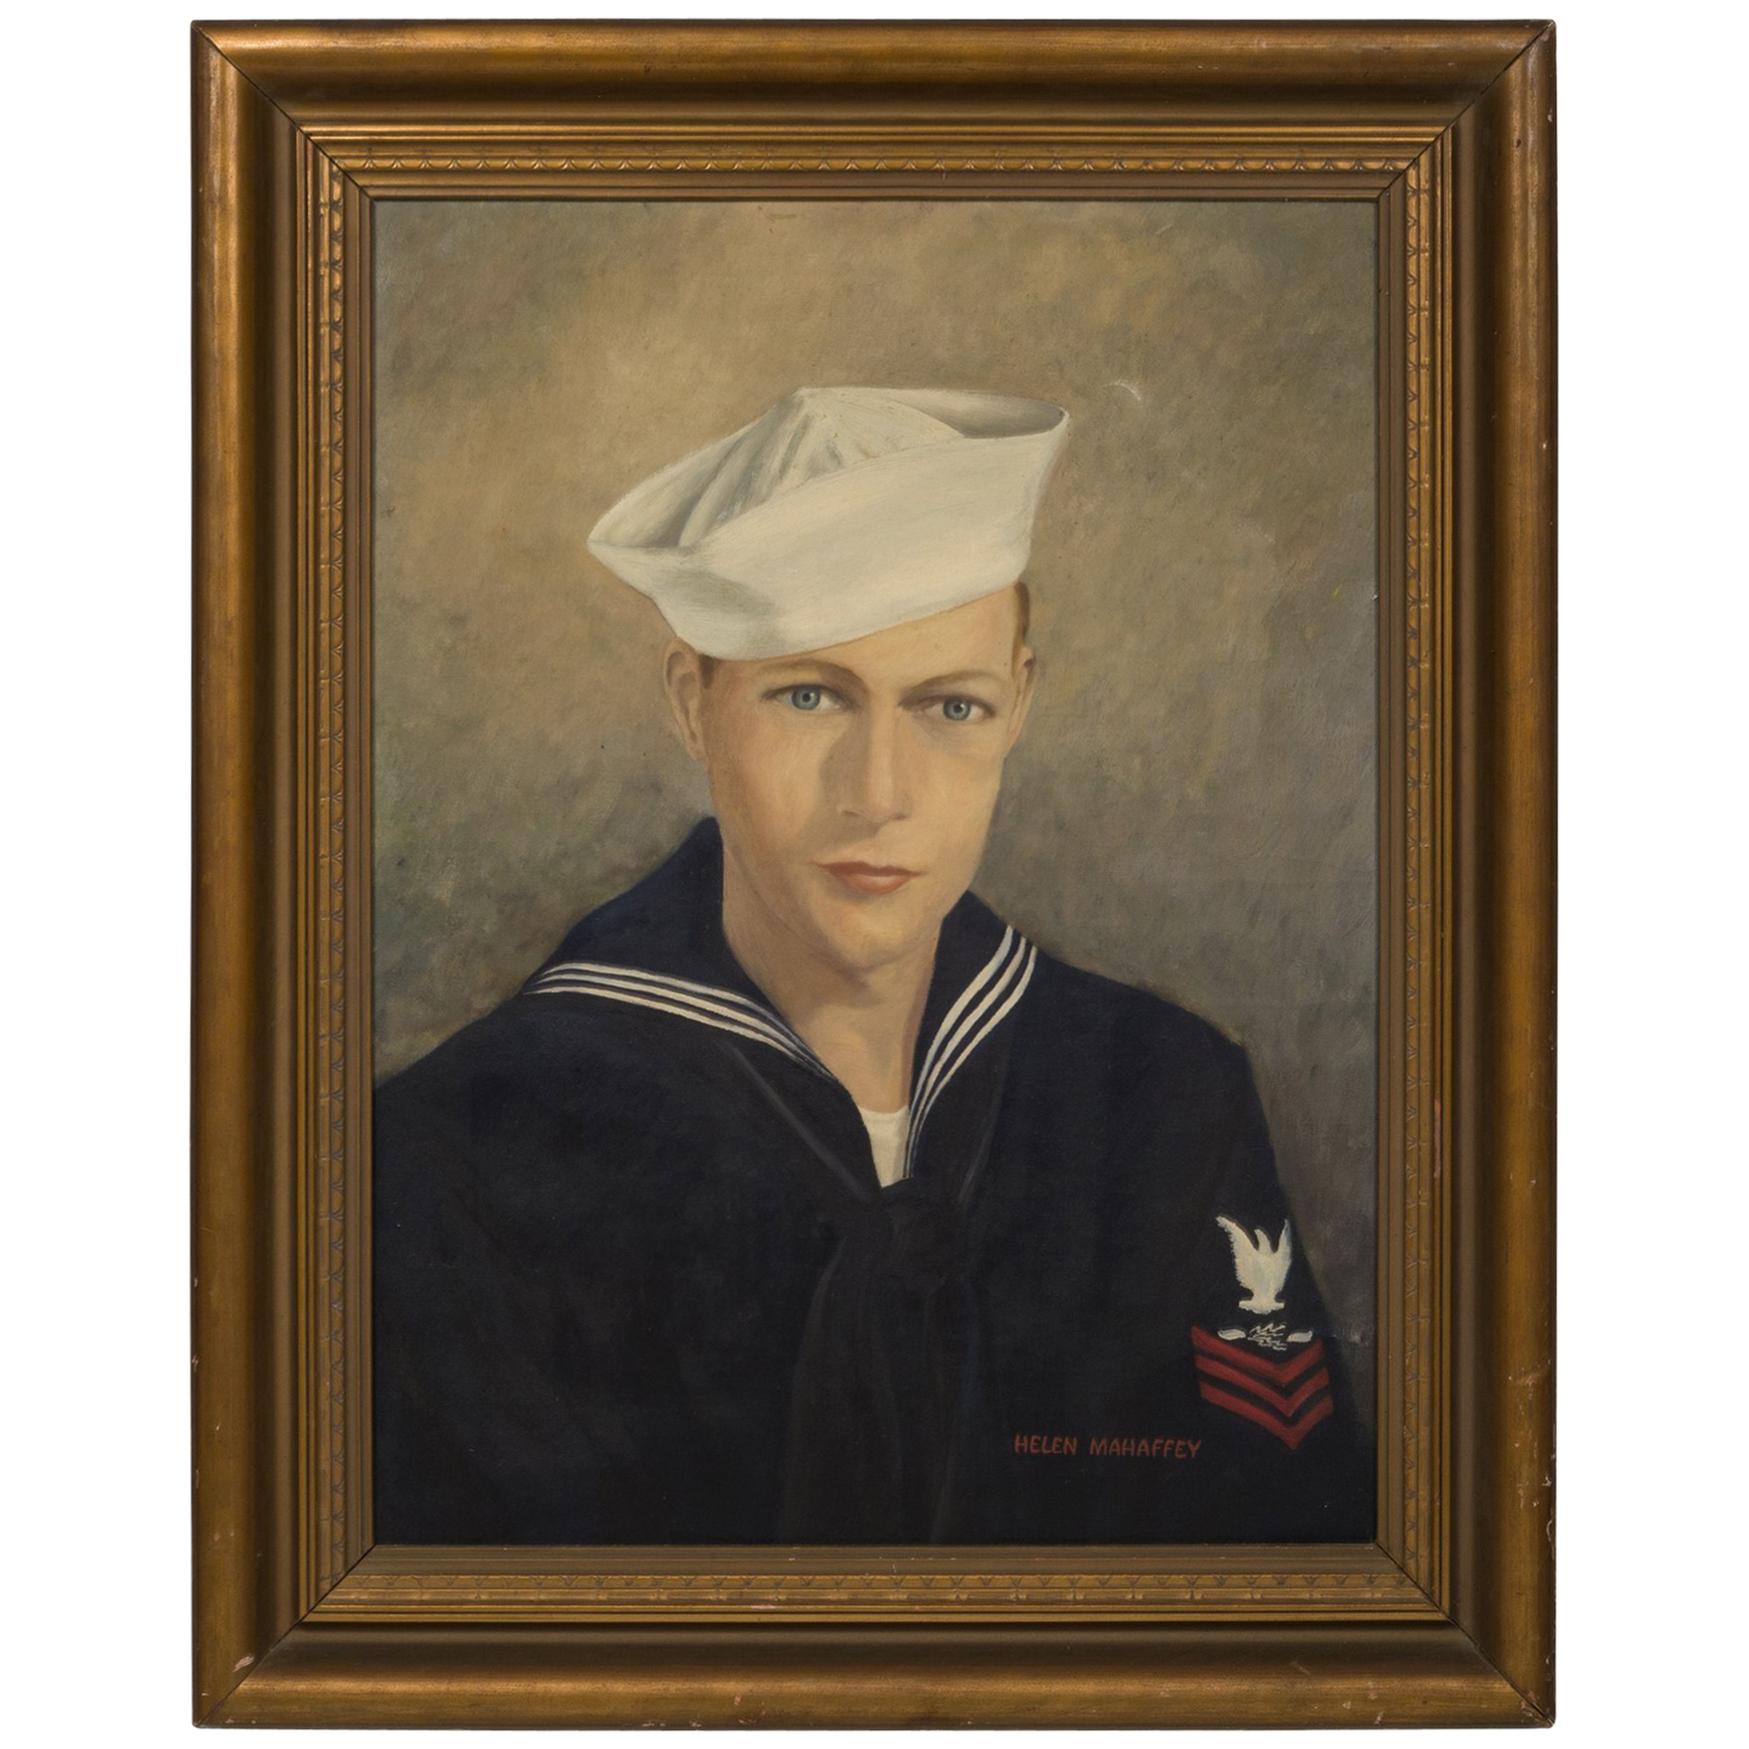 Acrylic on Canvas "First Class Petty Officer" by Helen Mahaffey, circa 1942-1959